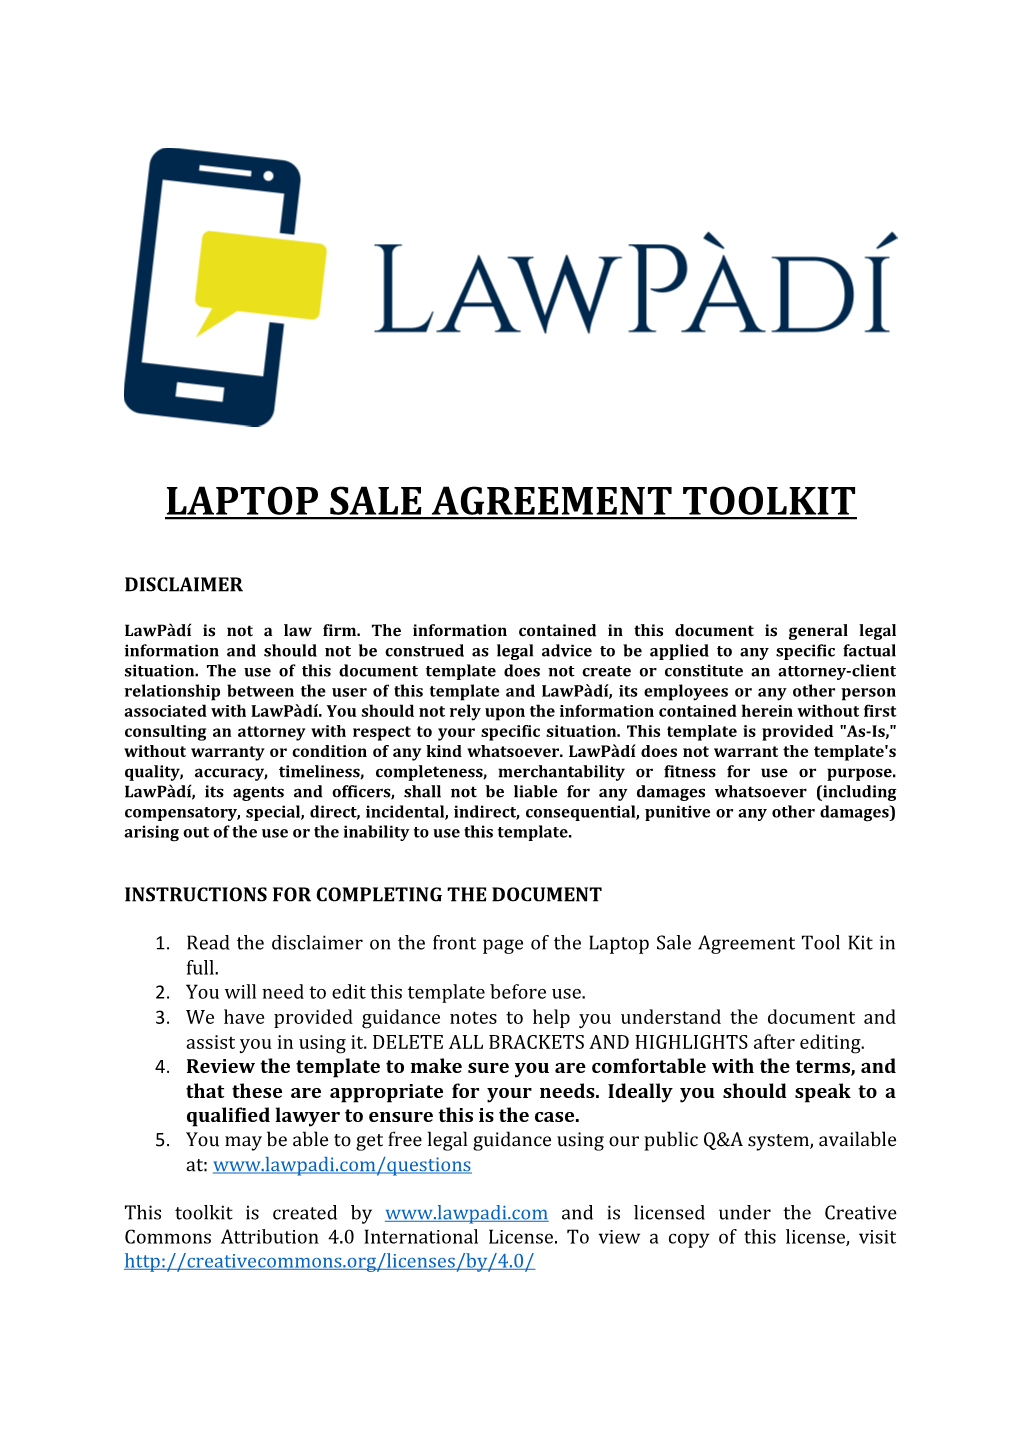 Laptop Sale Agreement Toolkit